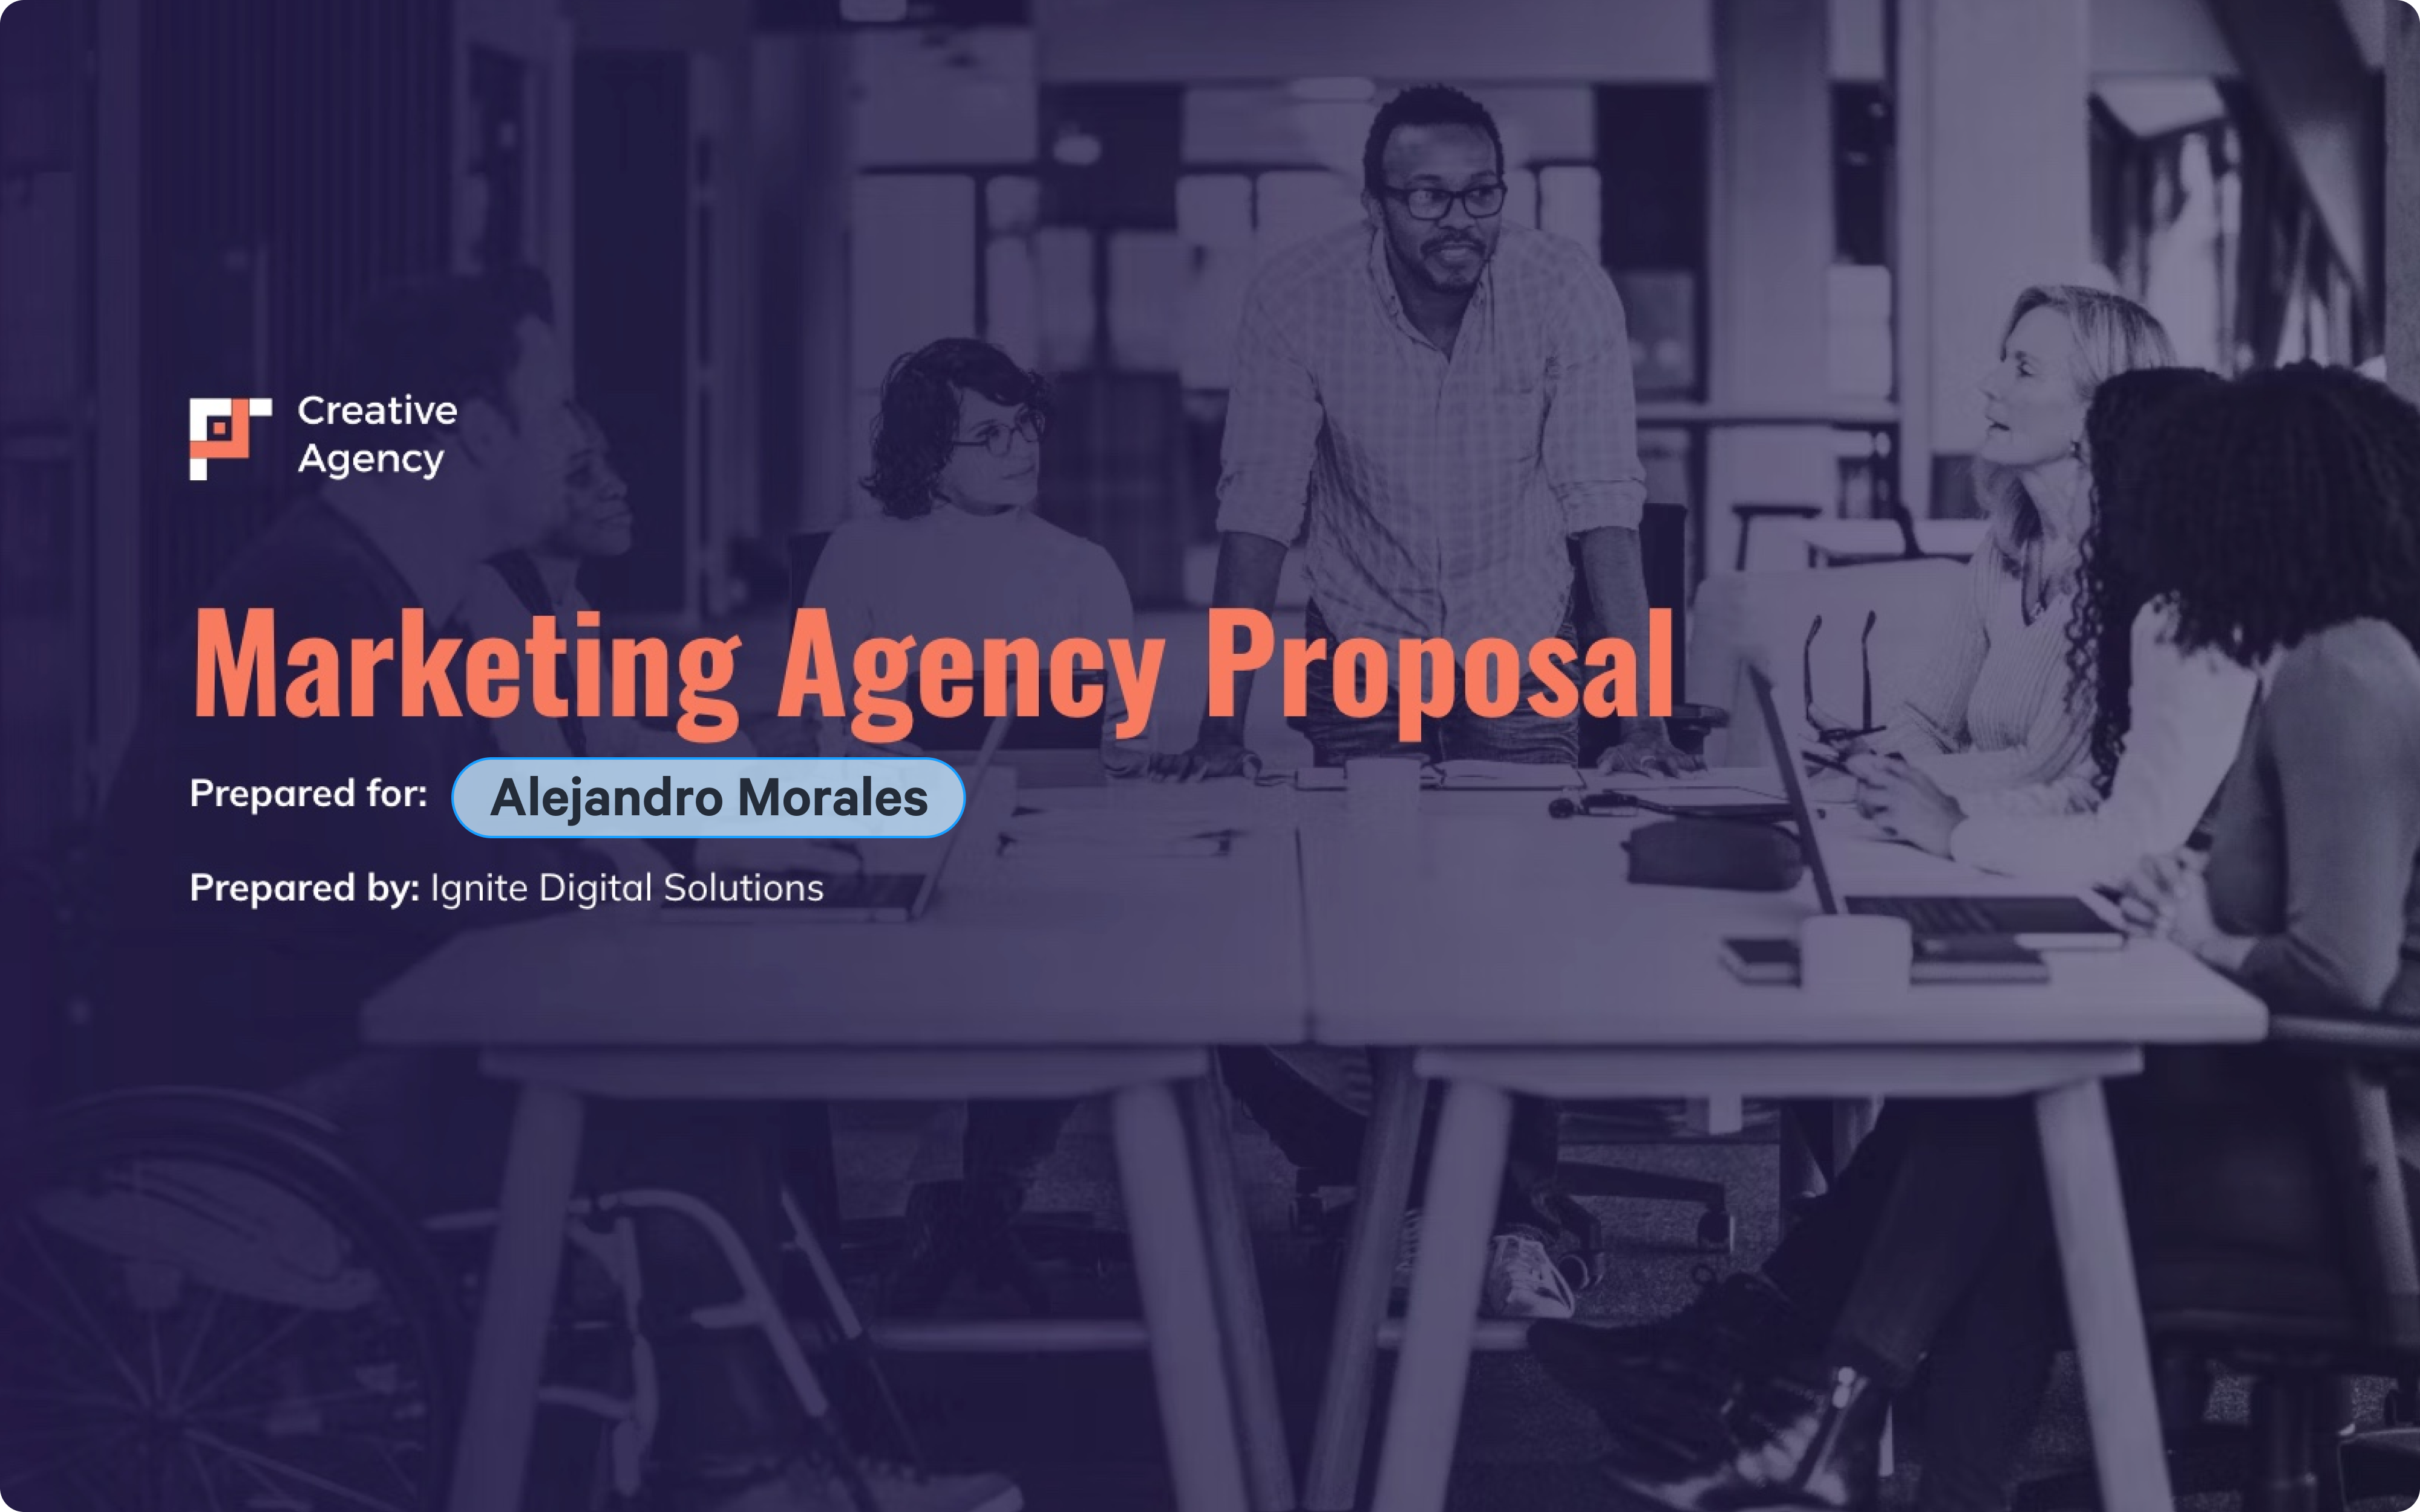 a marketing agency proposal prepared by alejandro morales